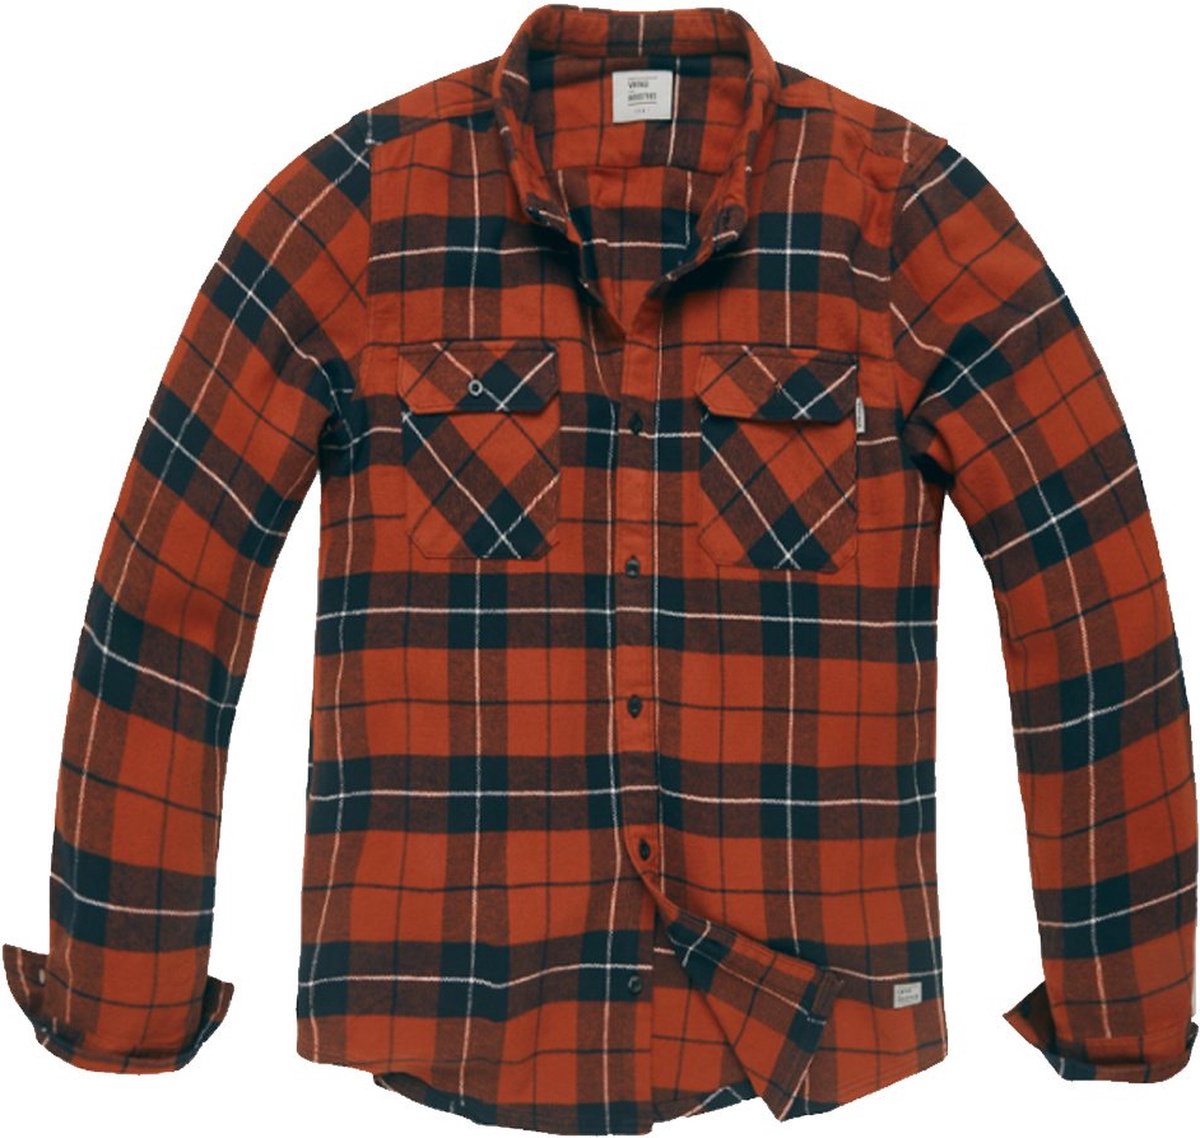 Vintage Industries Sem Flannel Orange Check Overhemd Heren